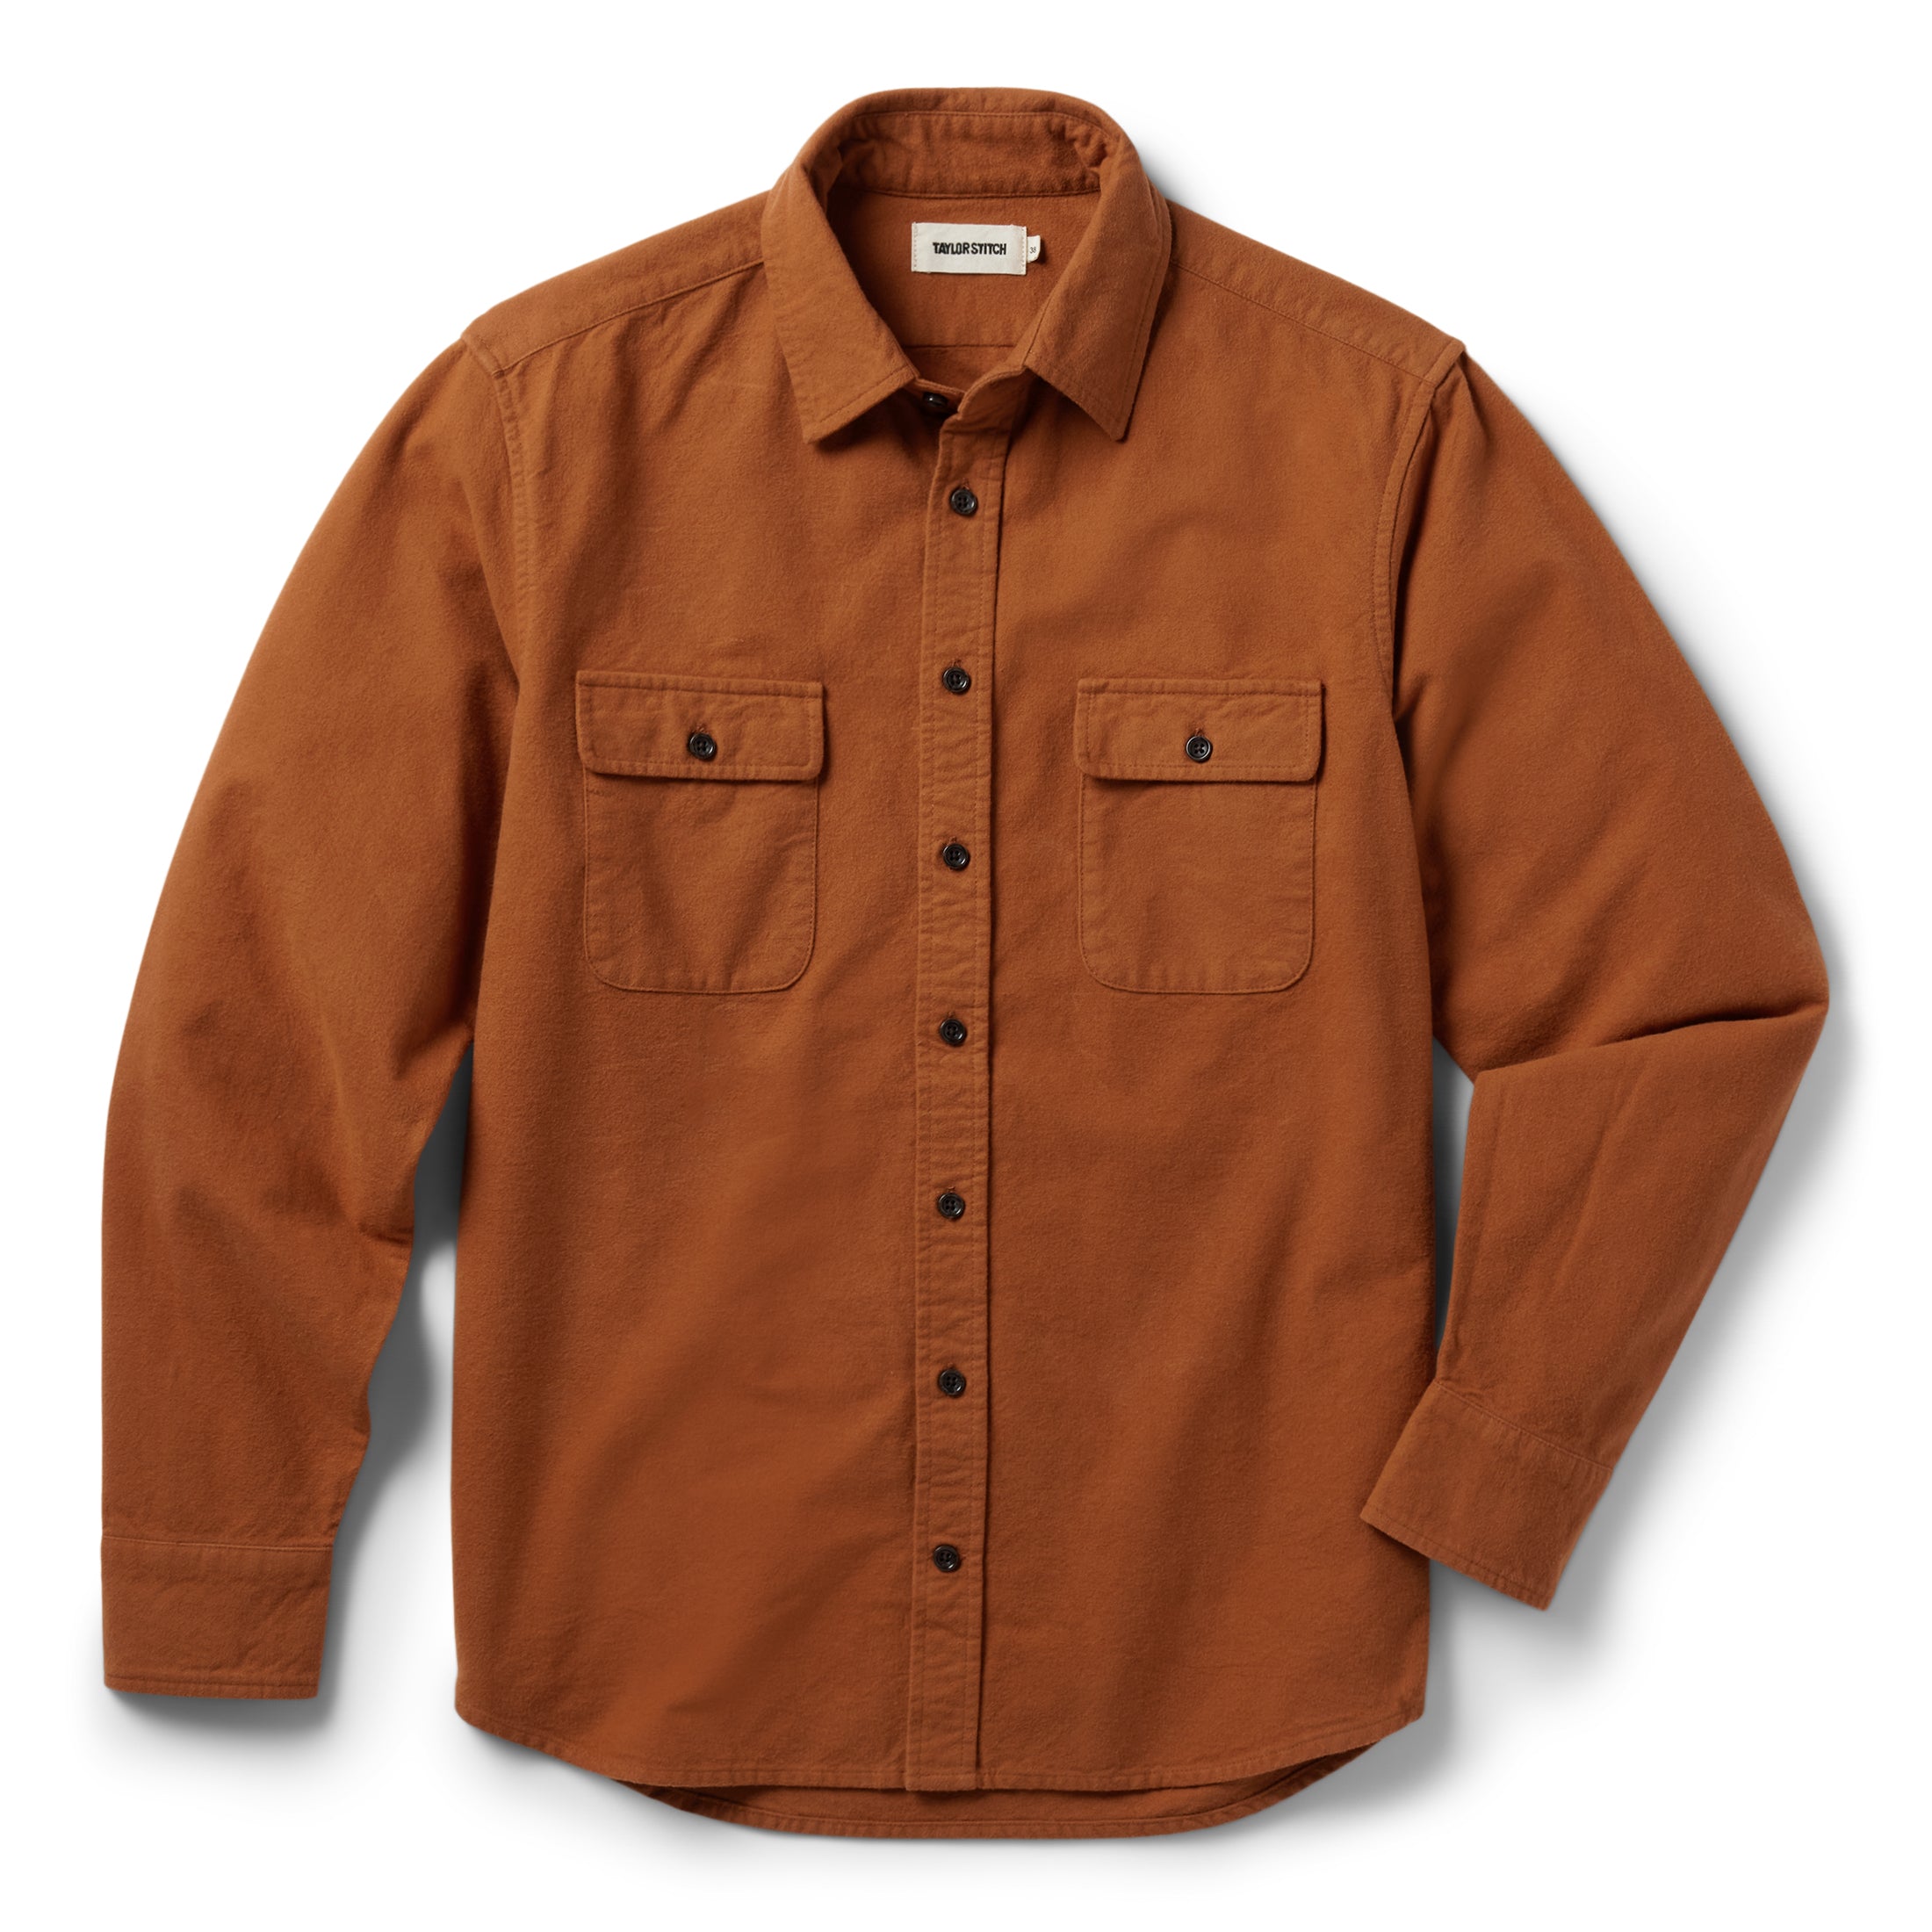 The Yosemite Shirt in Copper